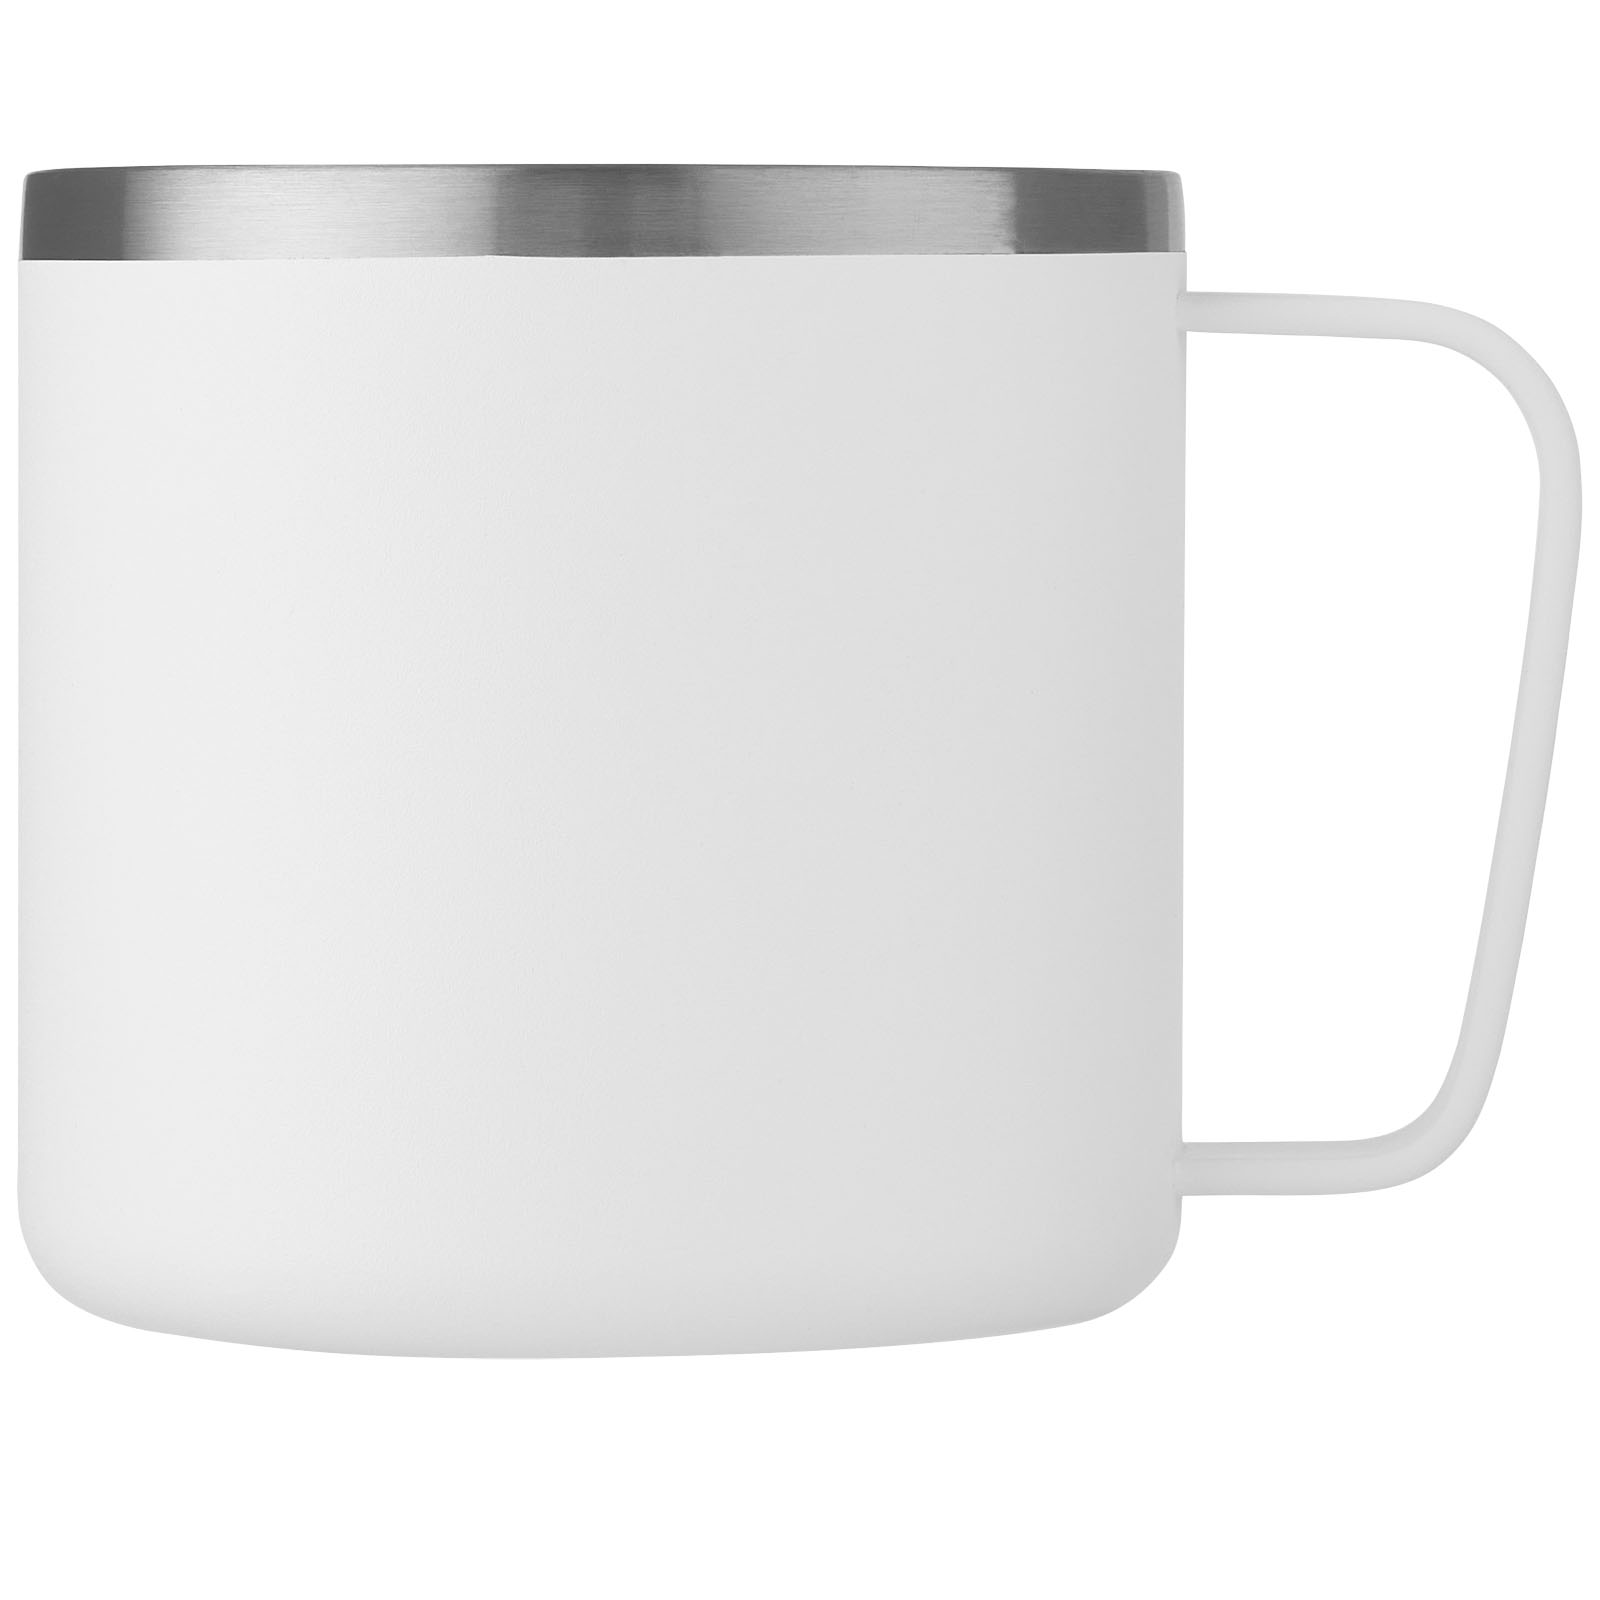 Advertising Insulated mugs - Nordre 350 ml copper vacuum insulated mug - 2